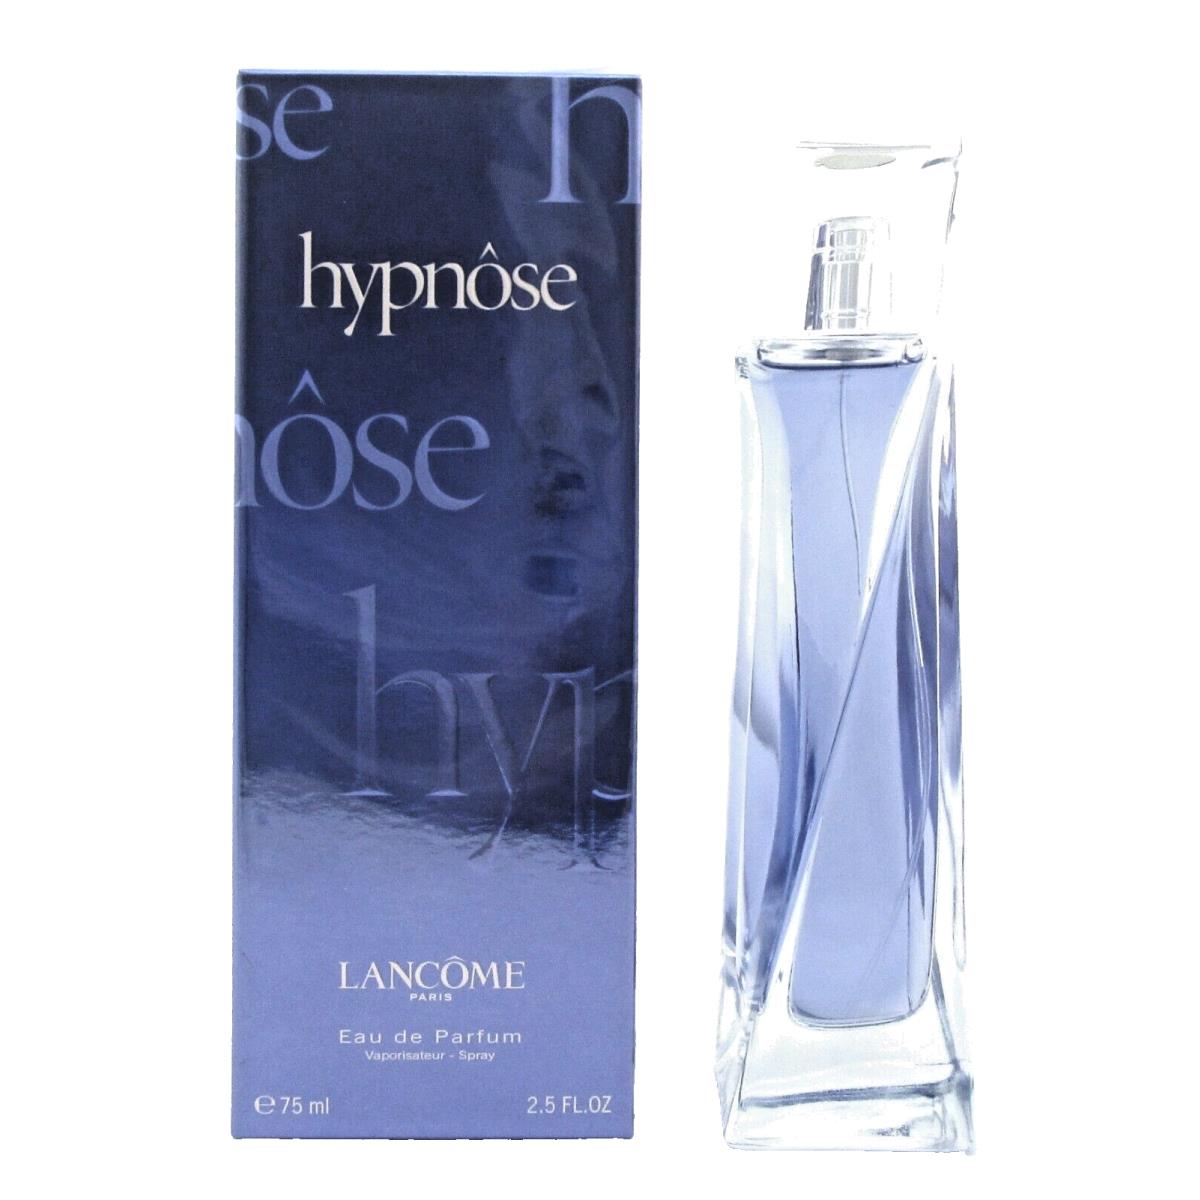 Hypnose by Lancome 2.5 Oz./ 75 Ml. Eau de Parfum Spray For Women. Box